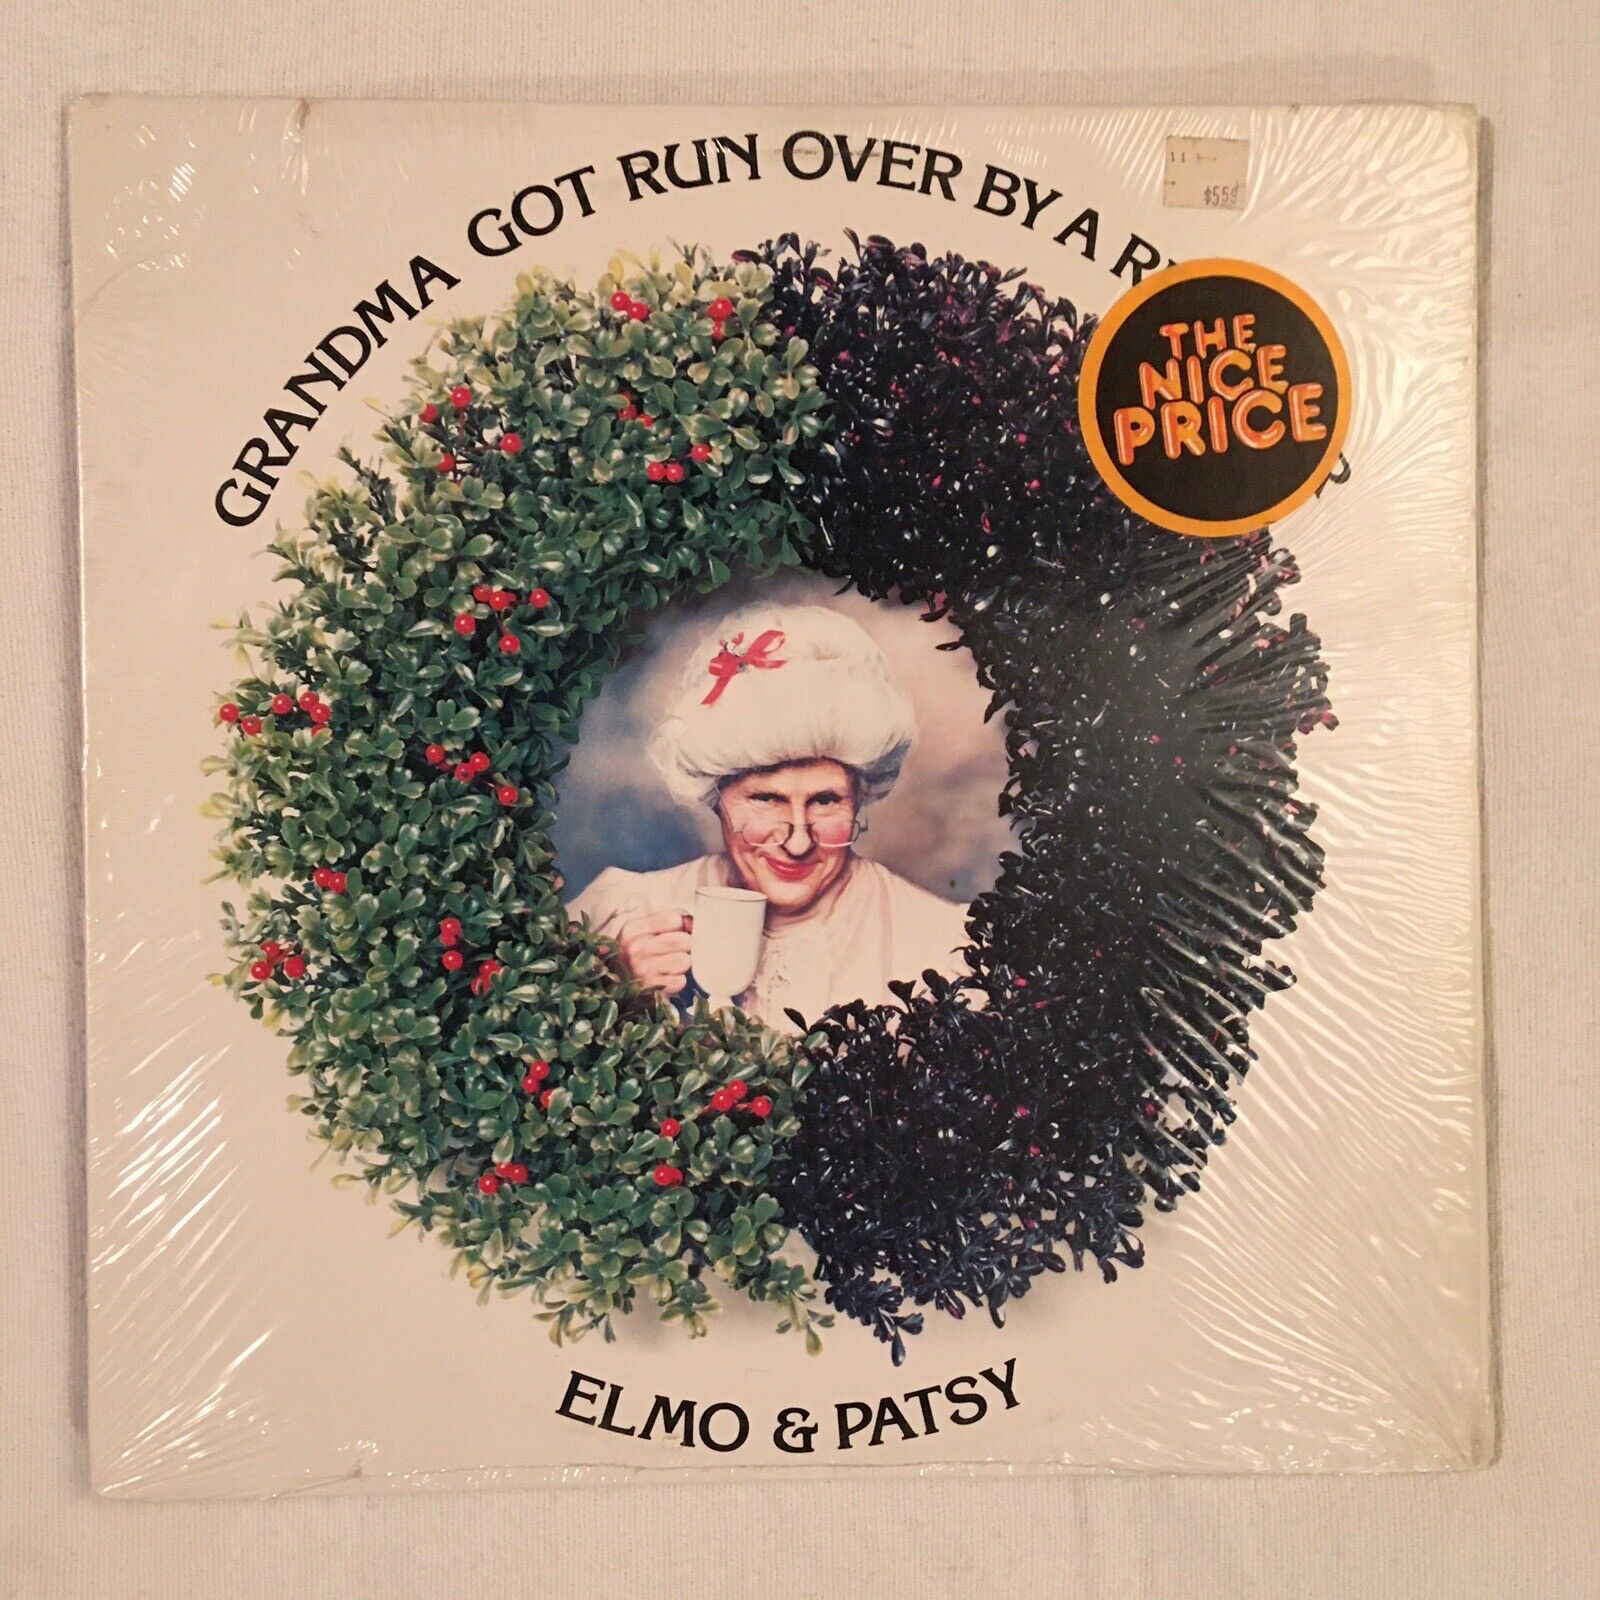 ELMO & PATSY GRANDMA GOT RUN OVER BY A REINDEER VG+ PE-39931 LP VINYL RECORD